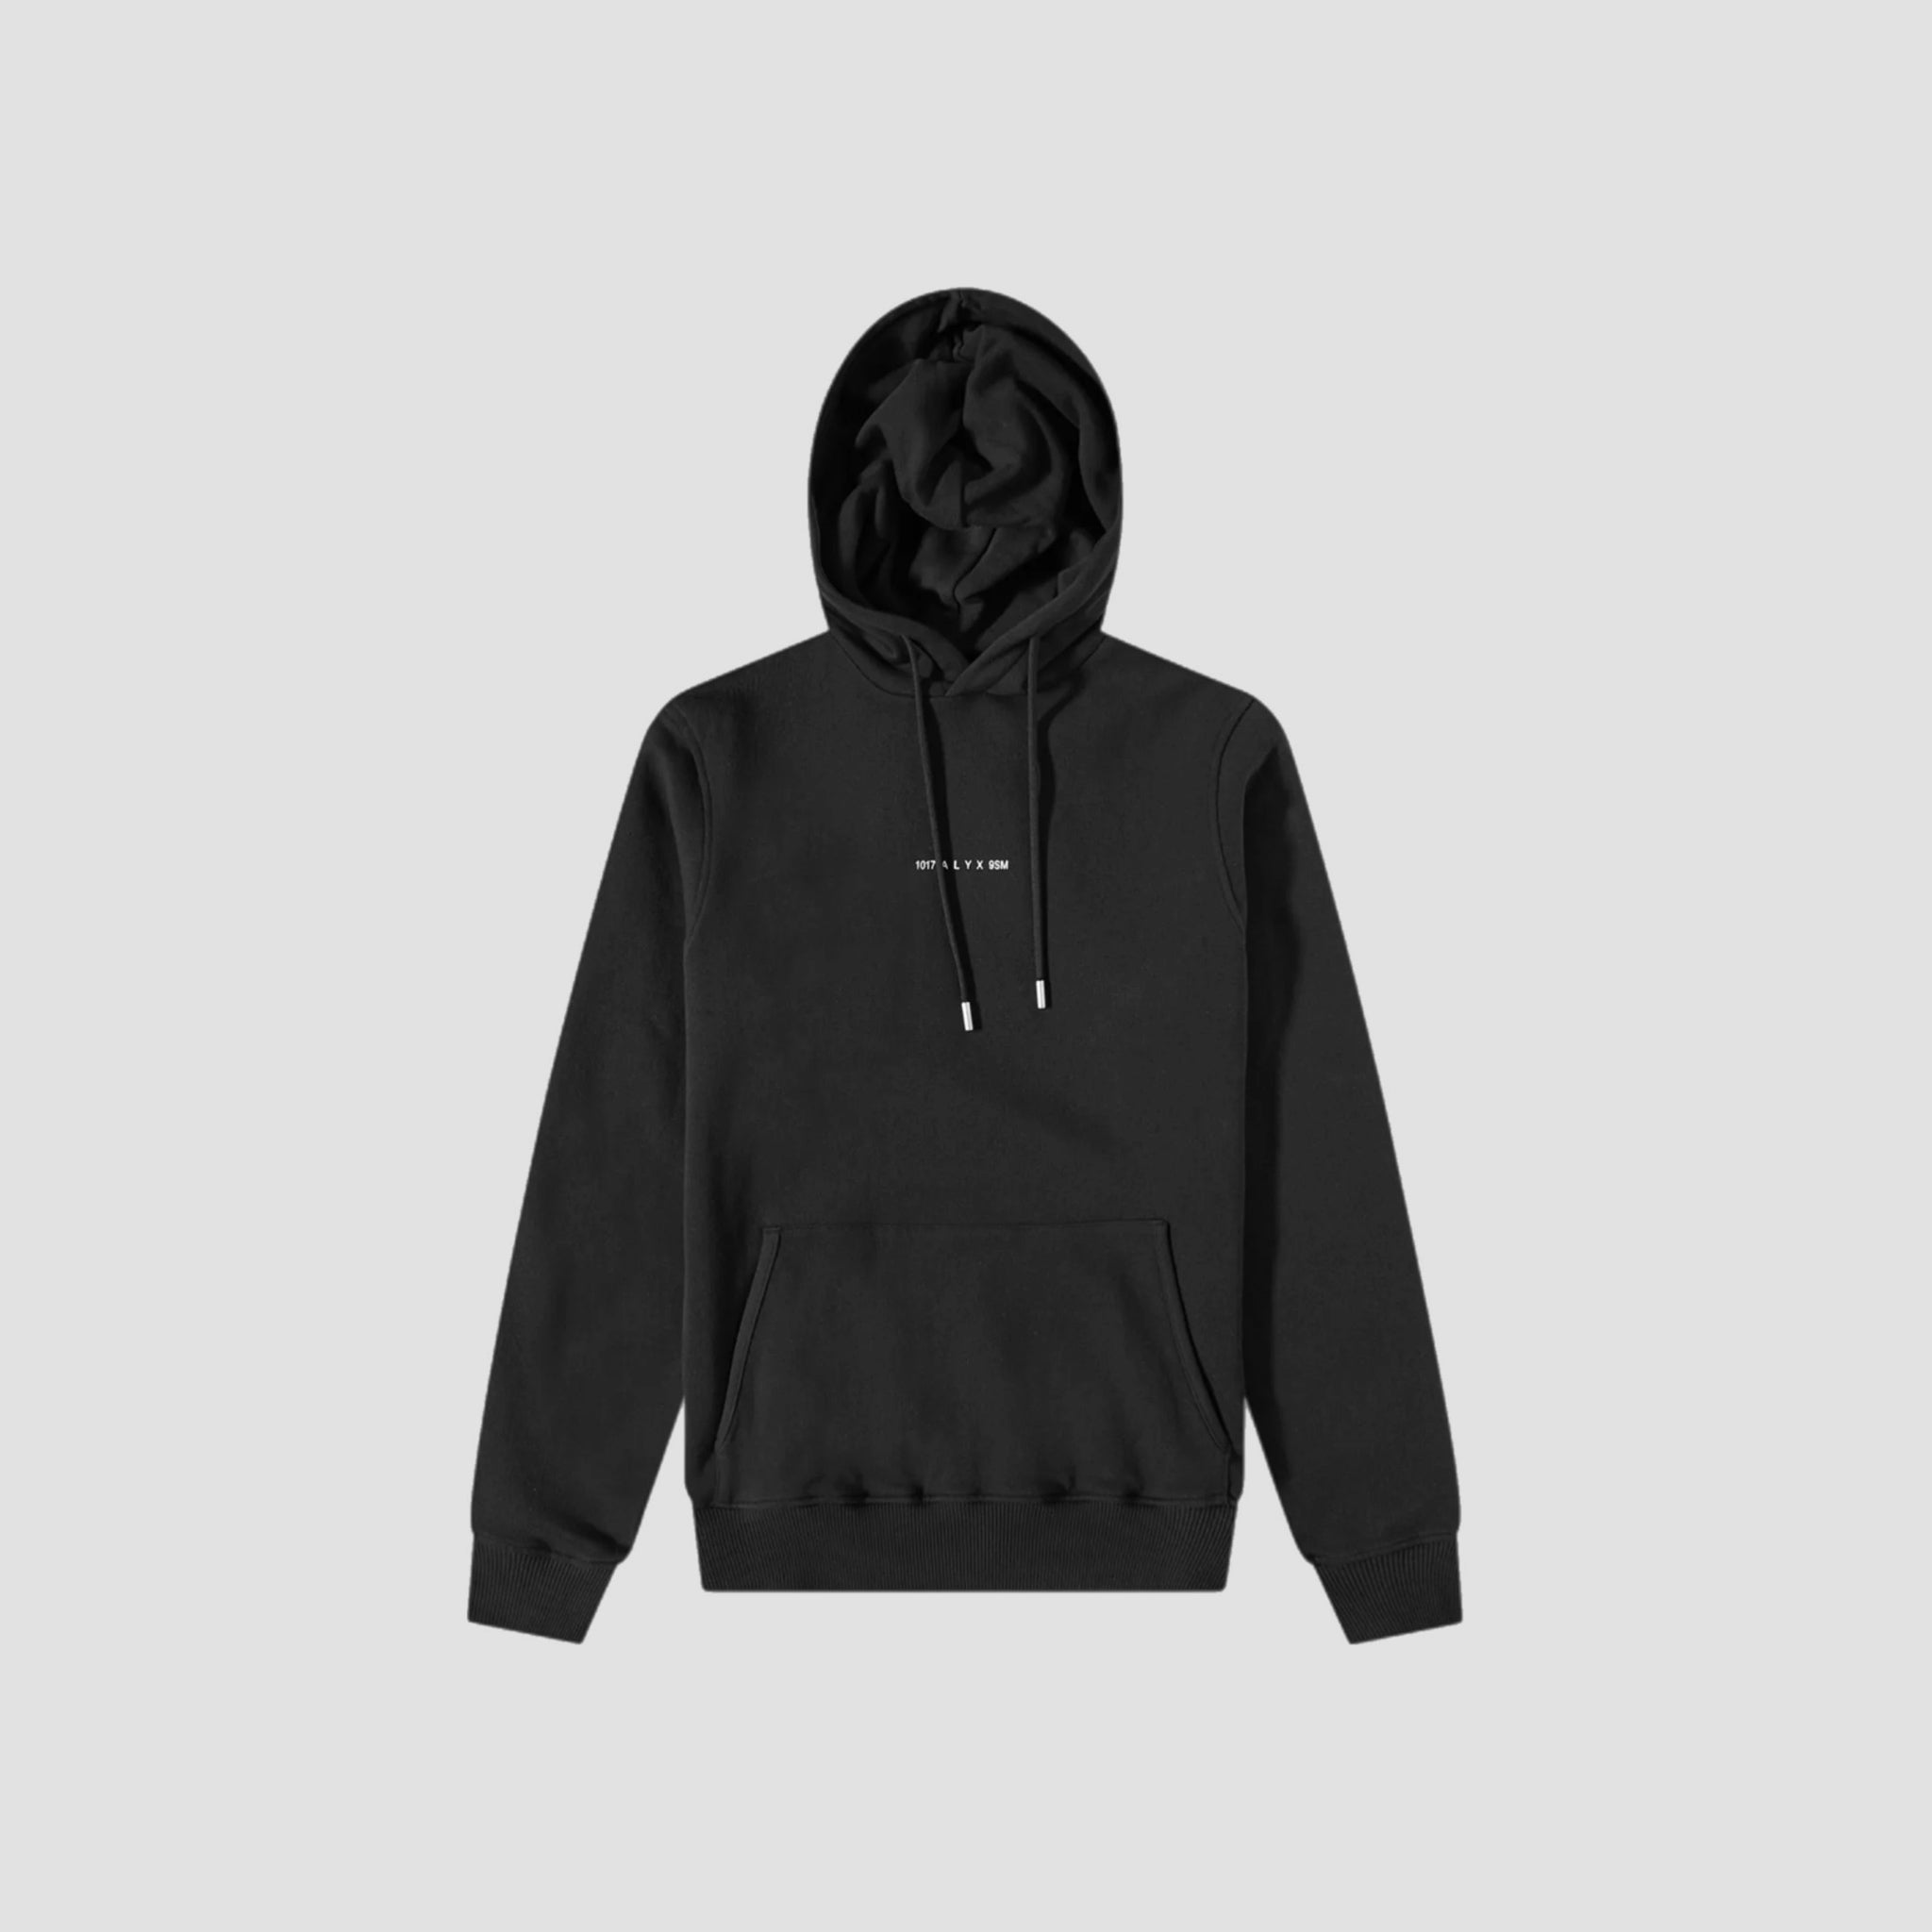 1017 ALYX 9SM Visual Hooded Sweatshirt